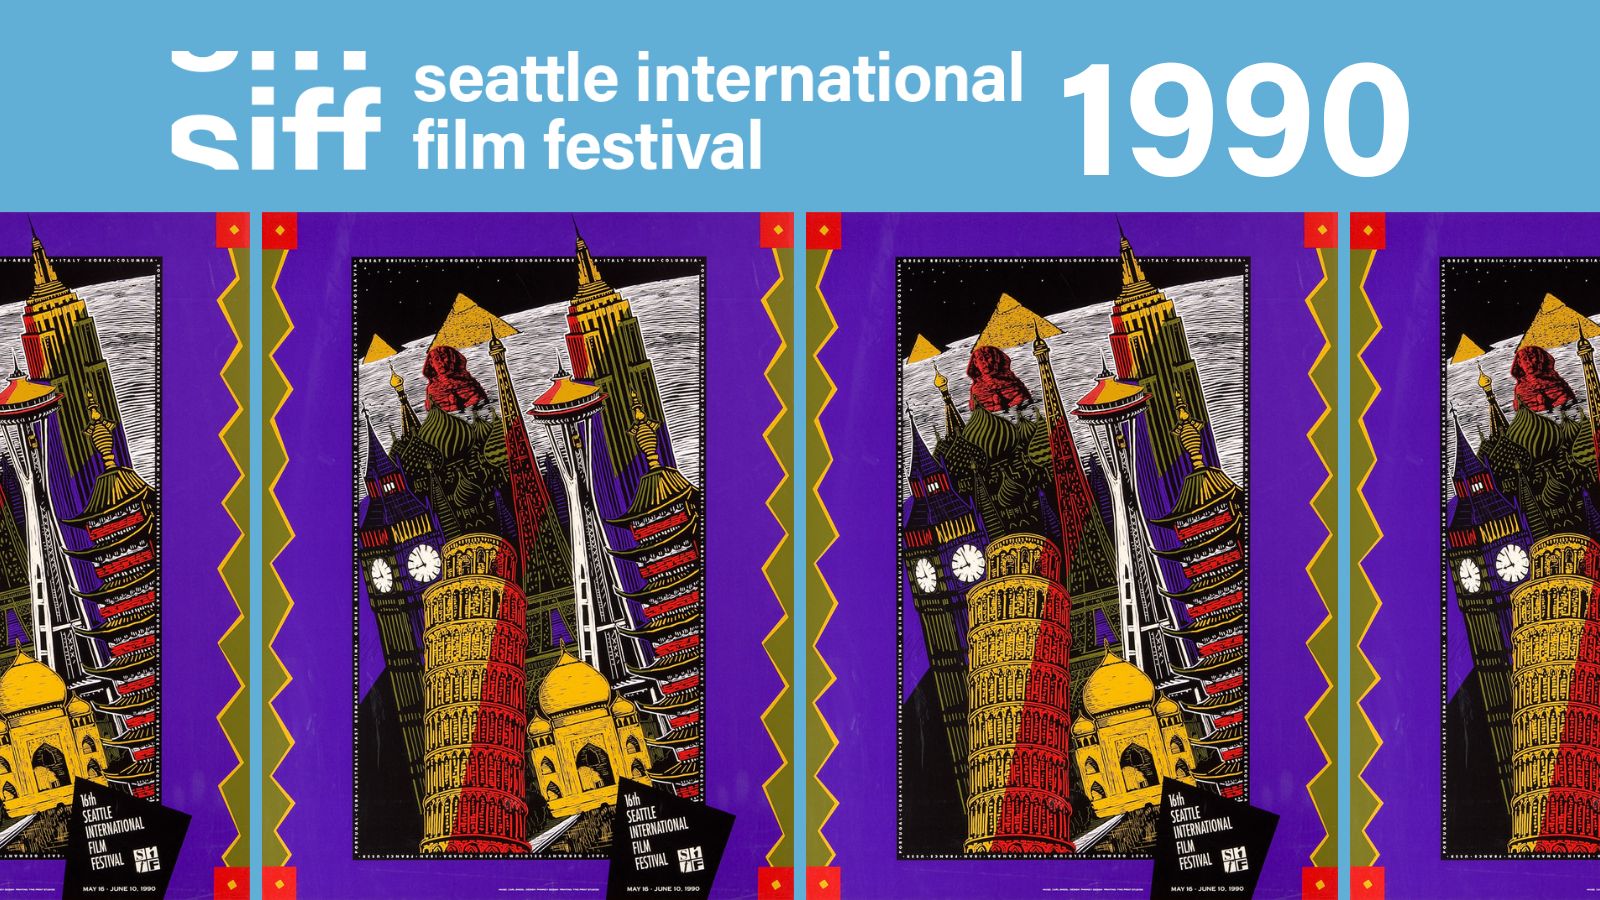 Seattle International Film Festival 1990